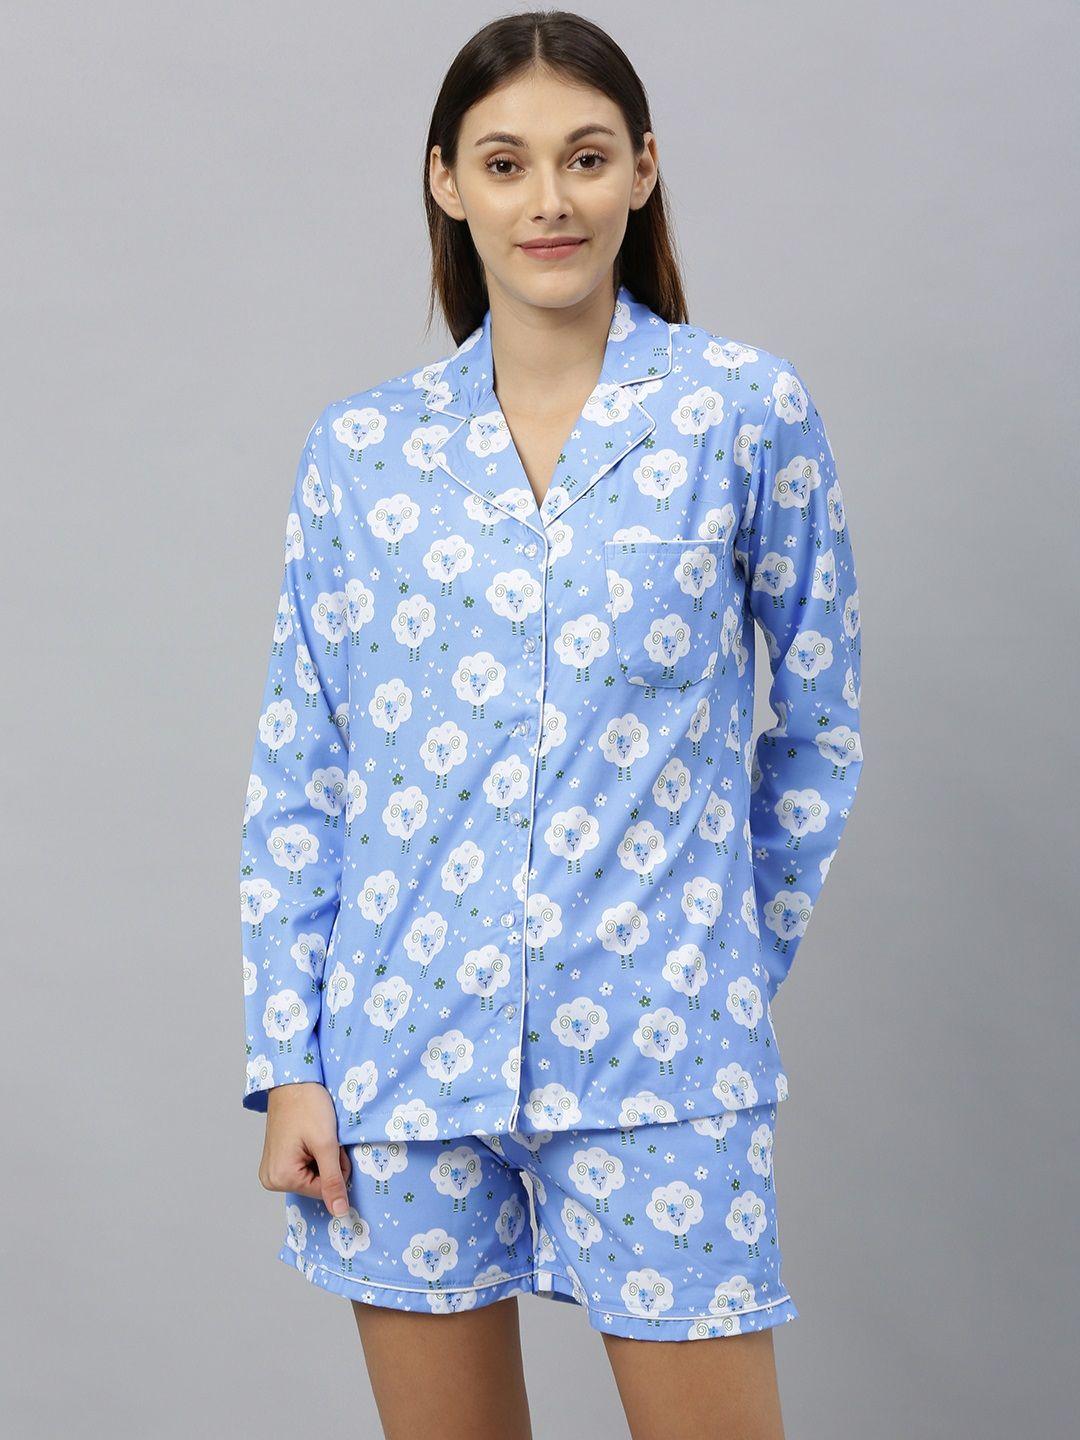 drape in vogue women blue & white sheep printed night suit